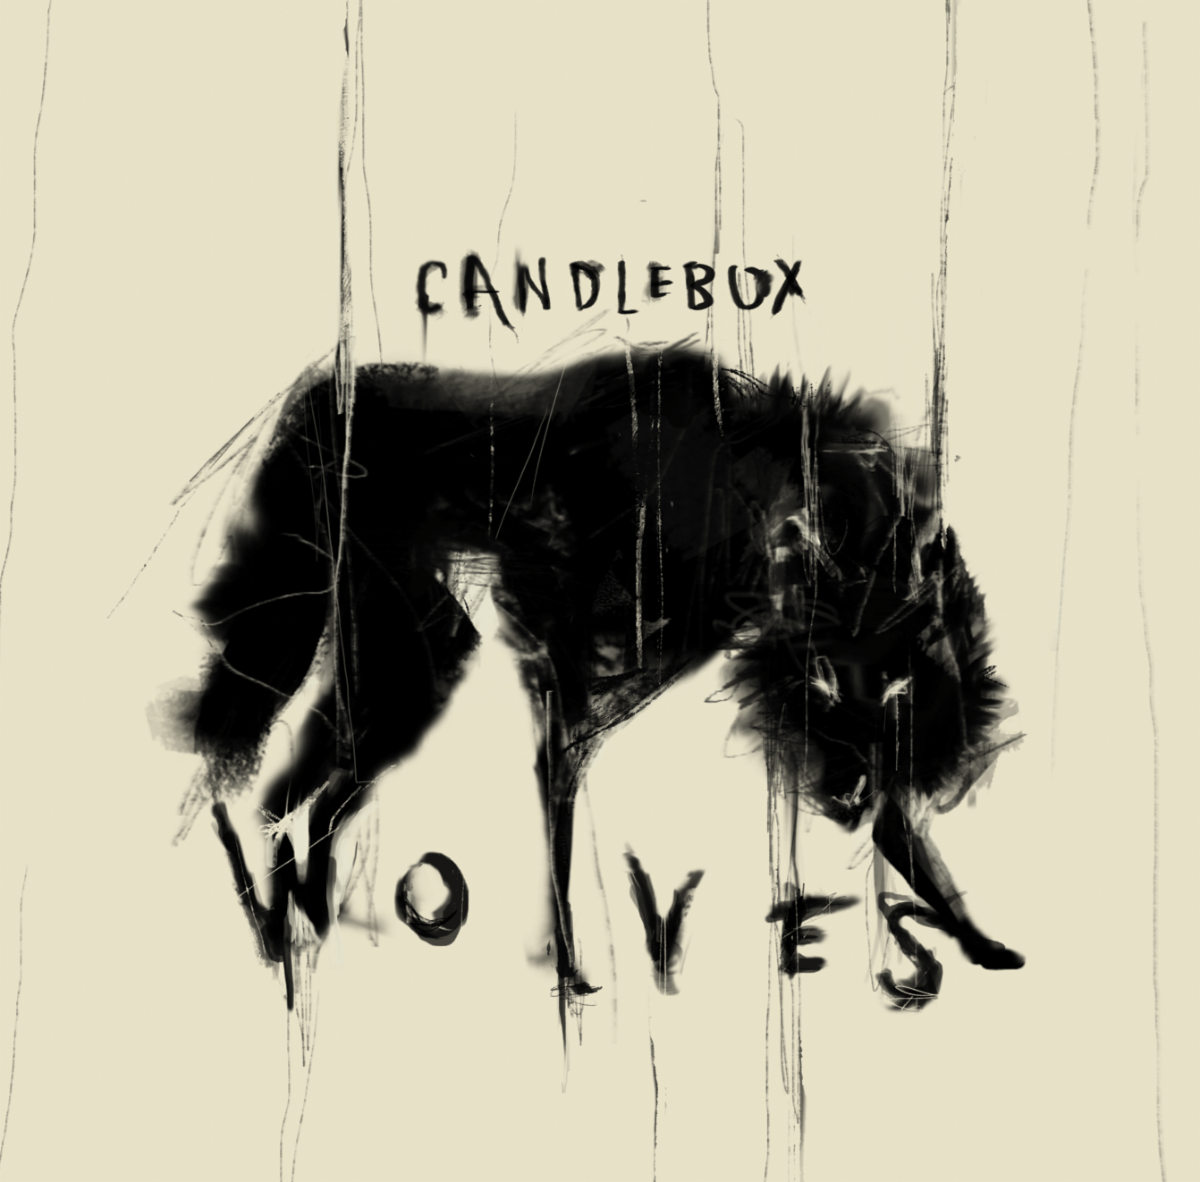 Candlebox 'Wolves' (2021)